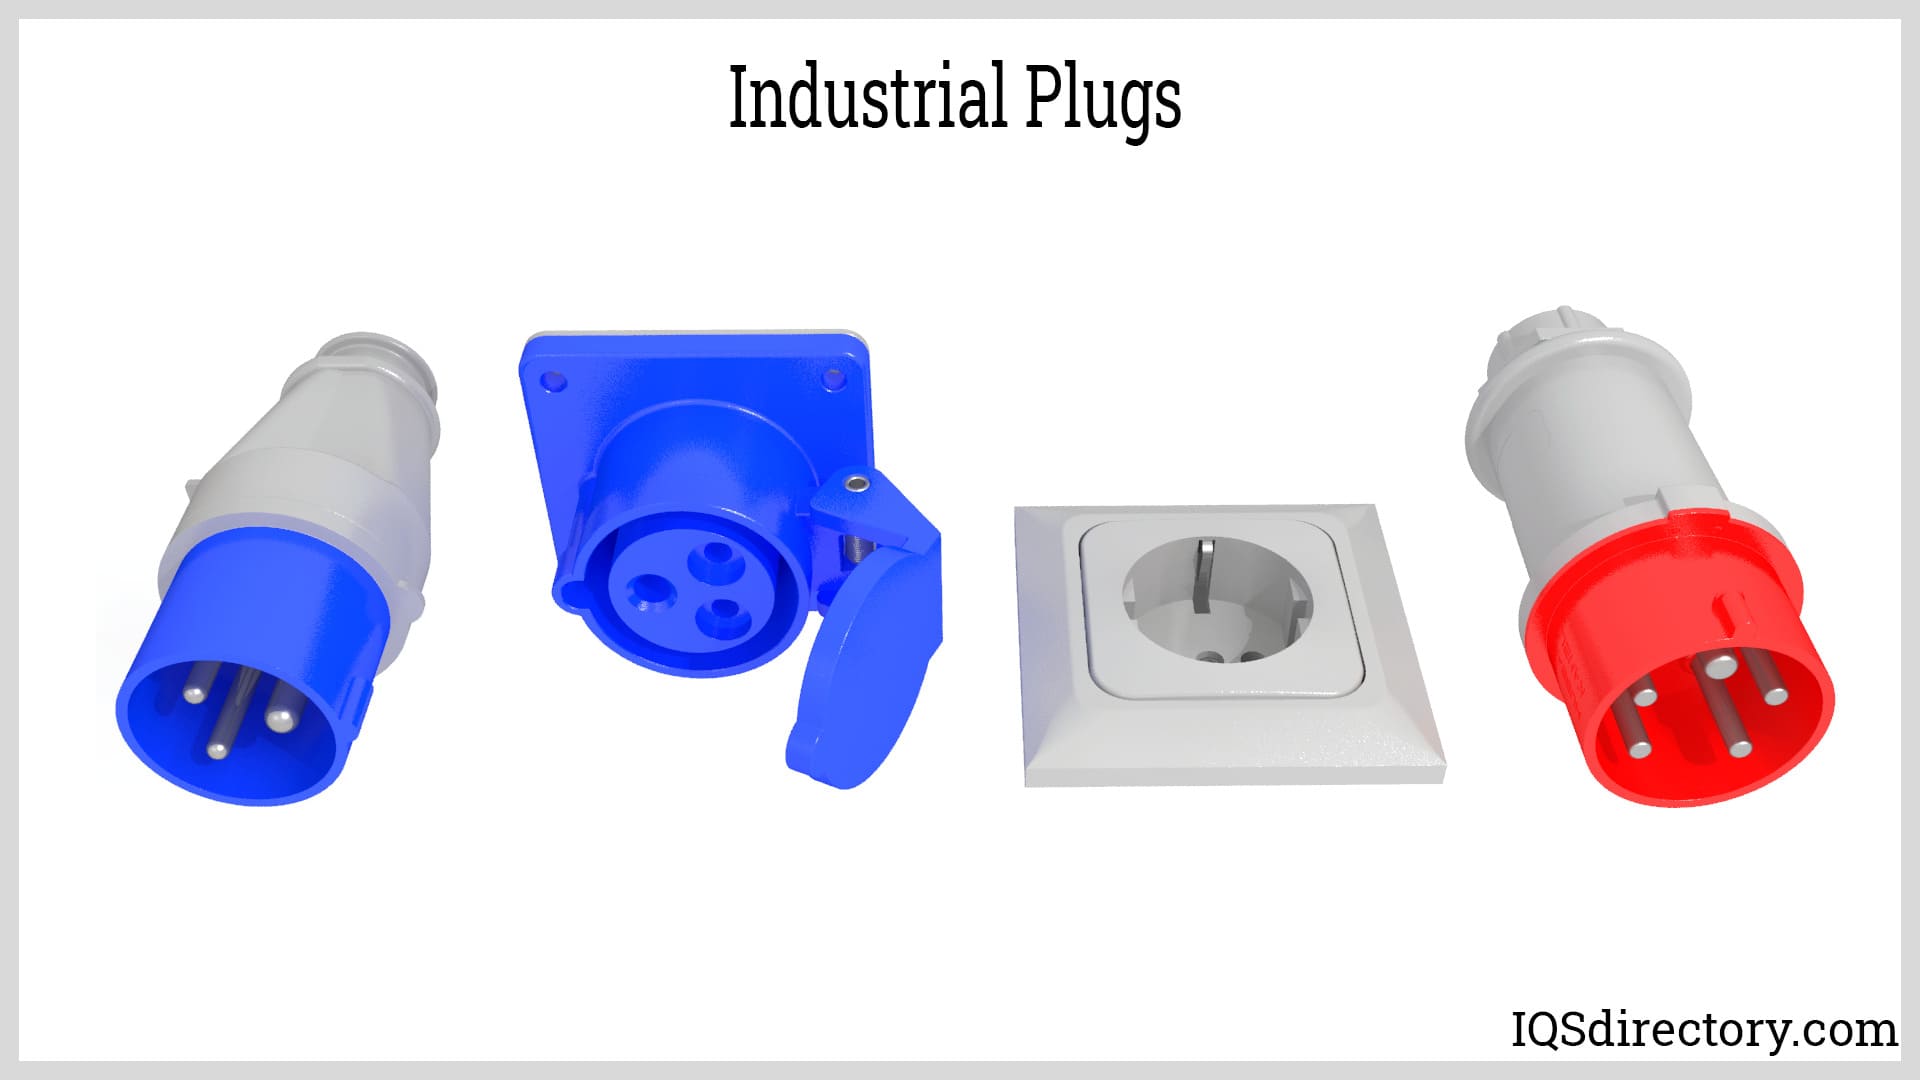 Industrial Plugs